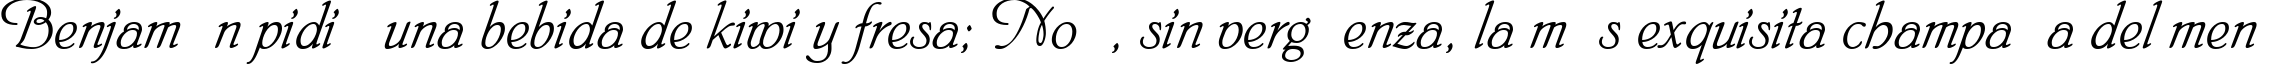 Пример написания шрифтом HeinrichScript текста на испанском